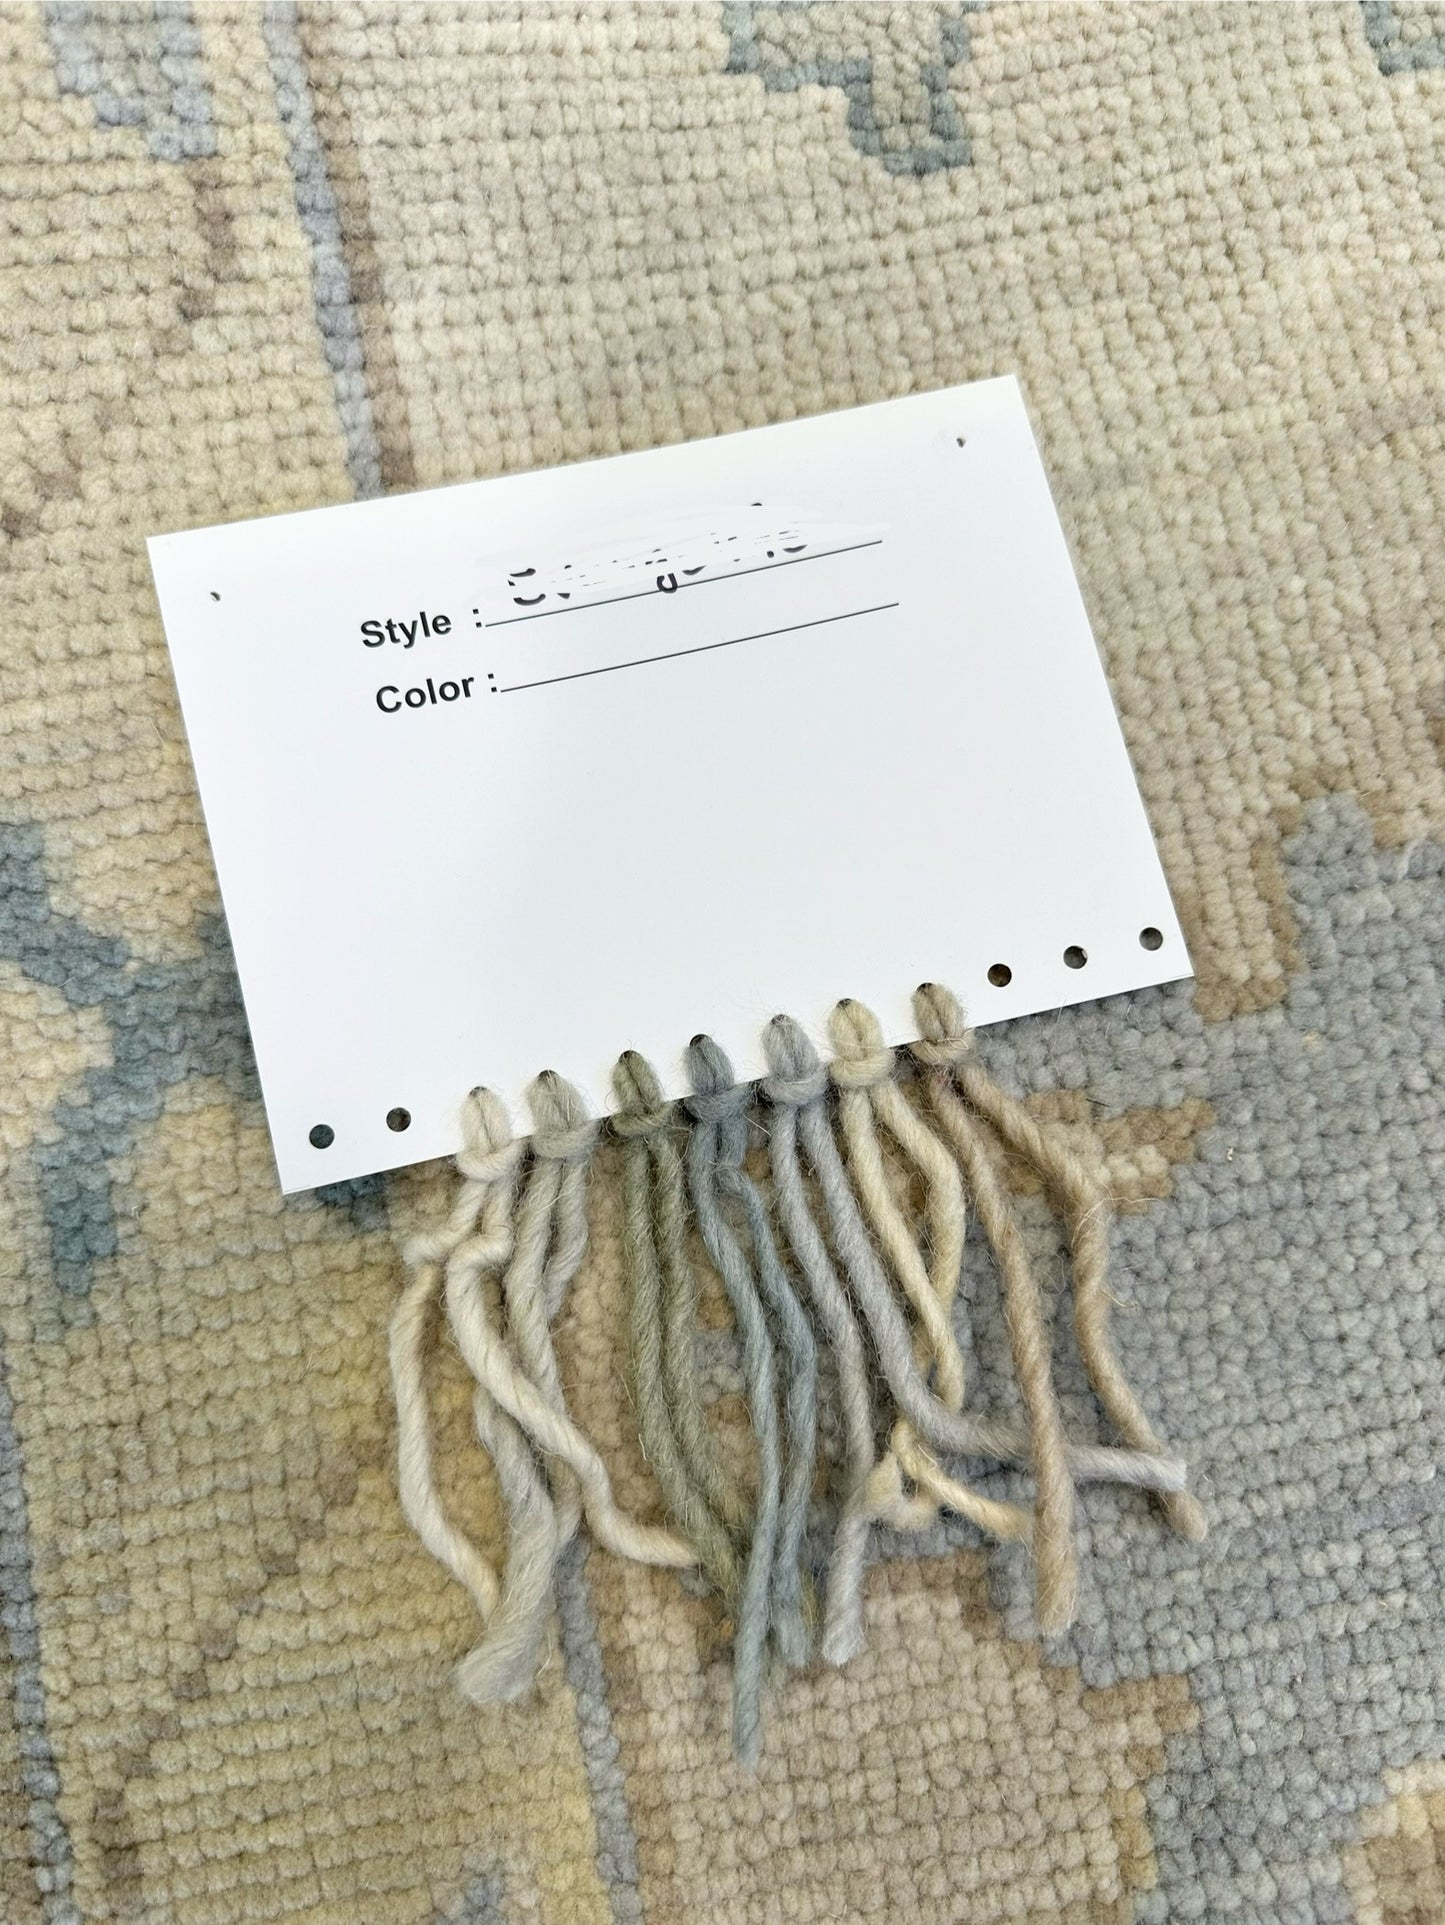 Samples (dyed yarn)